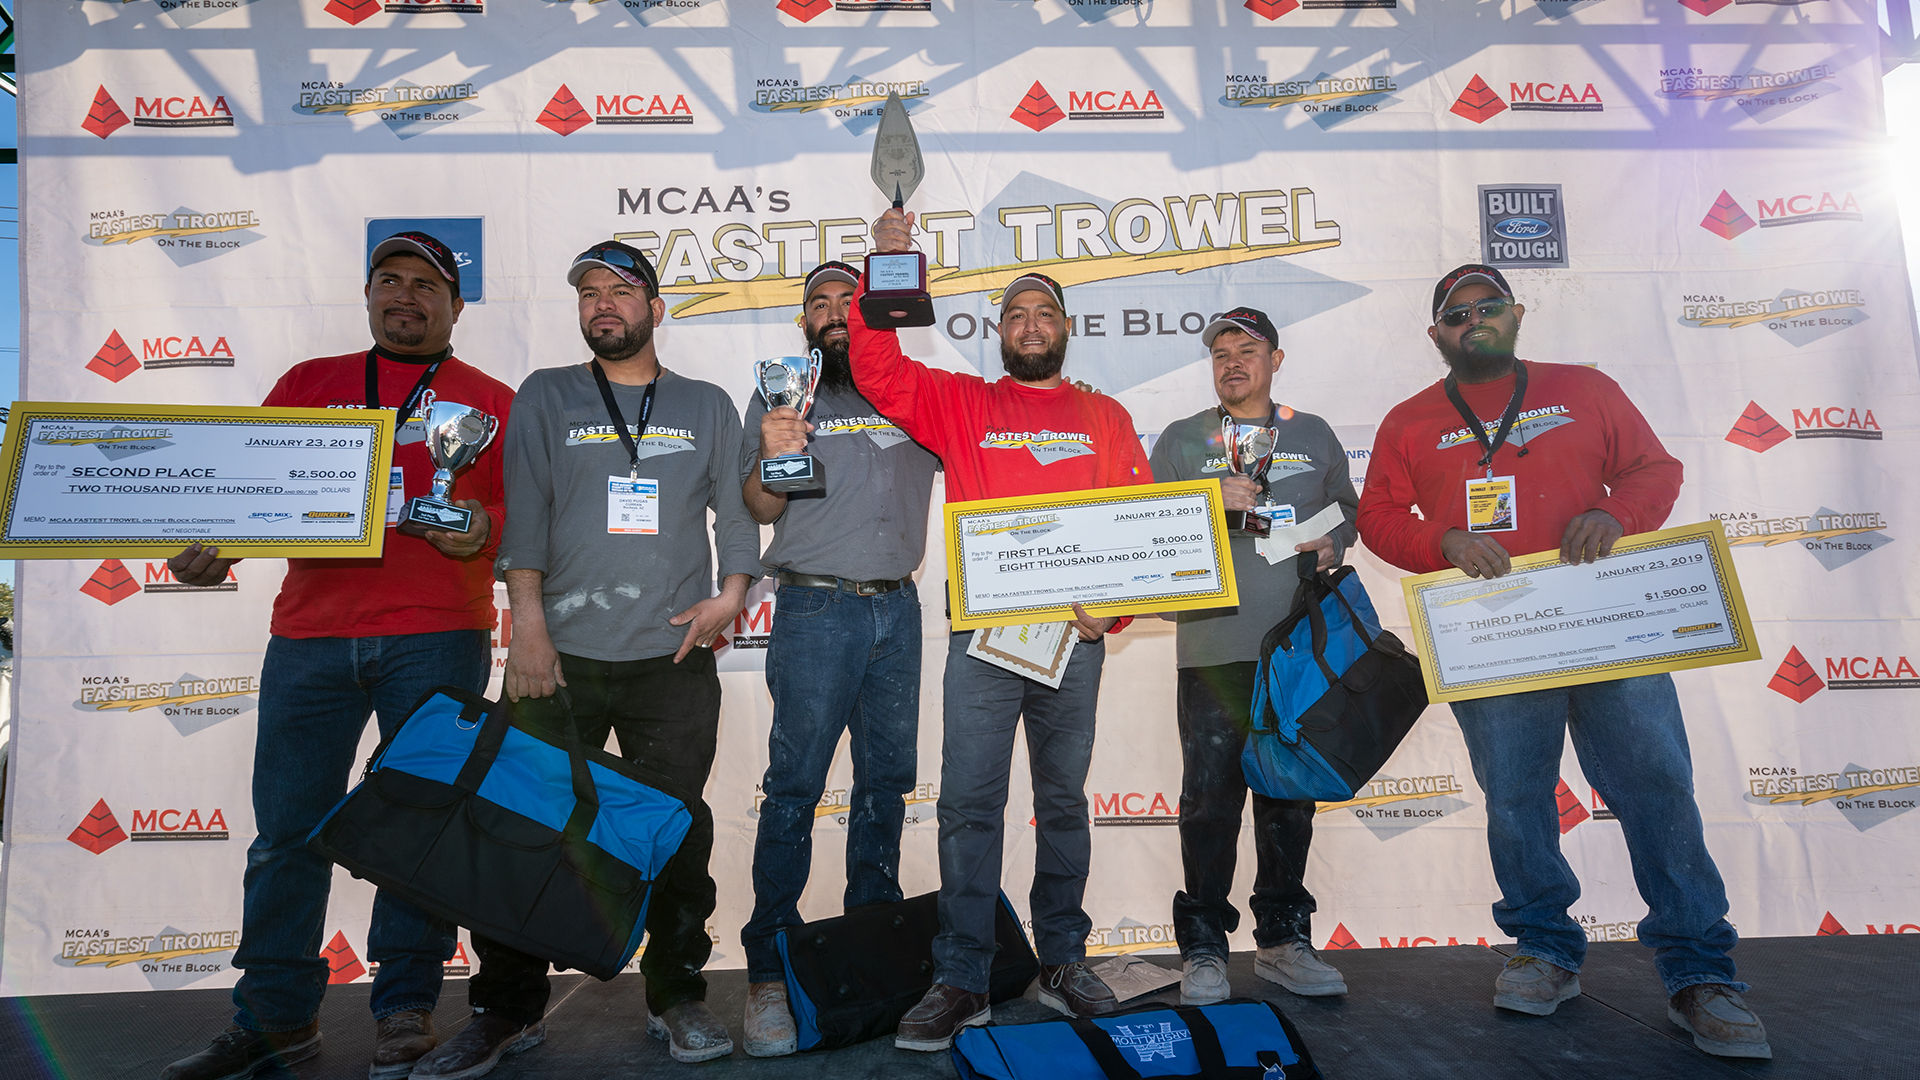 Winners of the 2019 MCAA Fastest Trowel on the Block